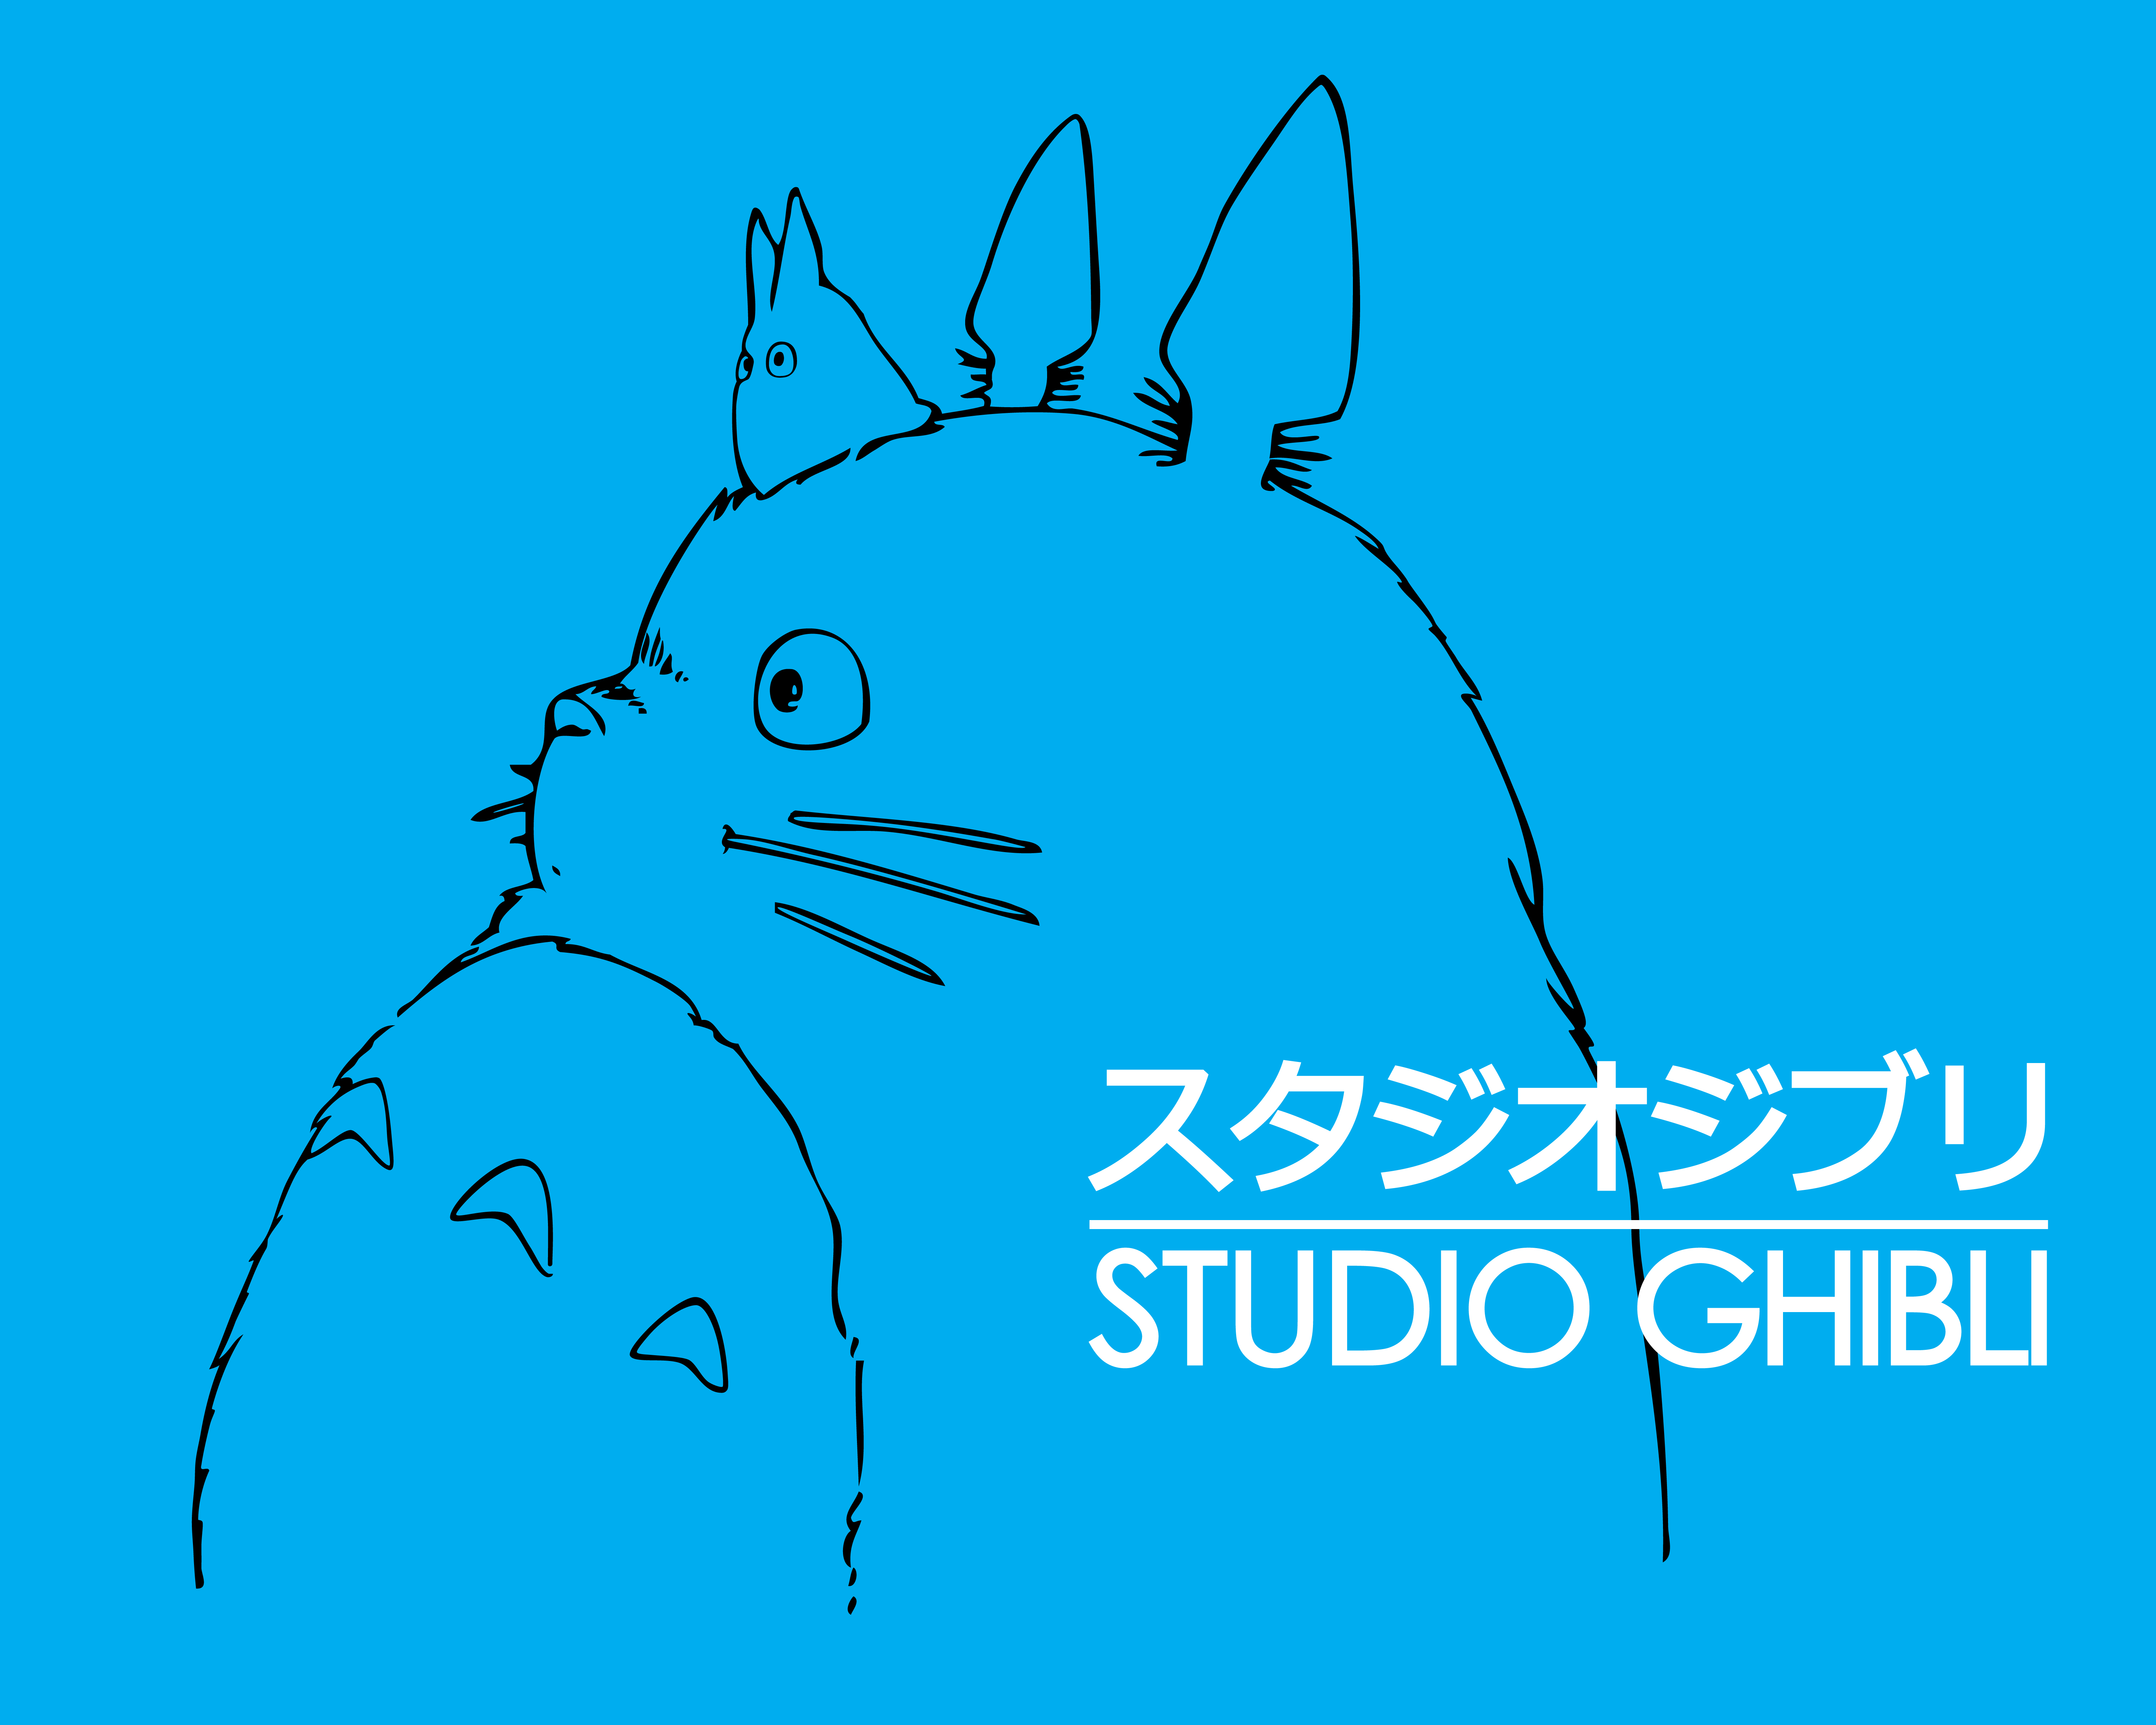 http://vignette4.wikia.nocookie.net/disney/images/9/96/Studio_Ghibli_Logo.jpg/revision/latest?cb=20140621101318